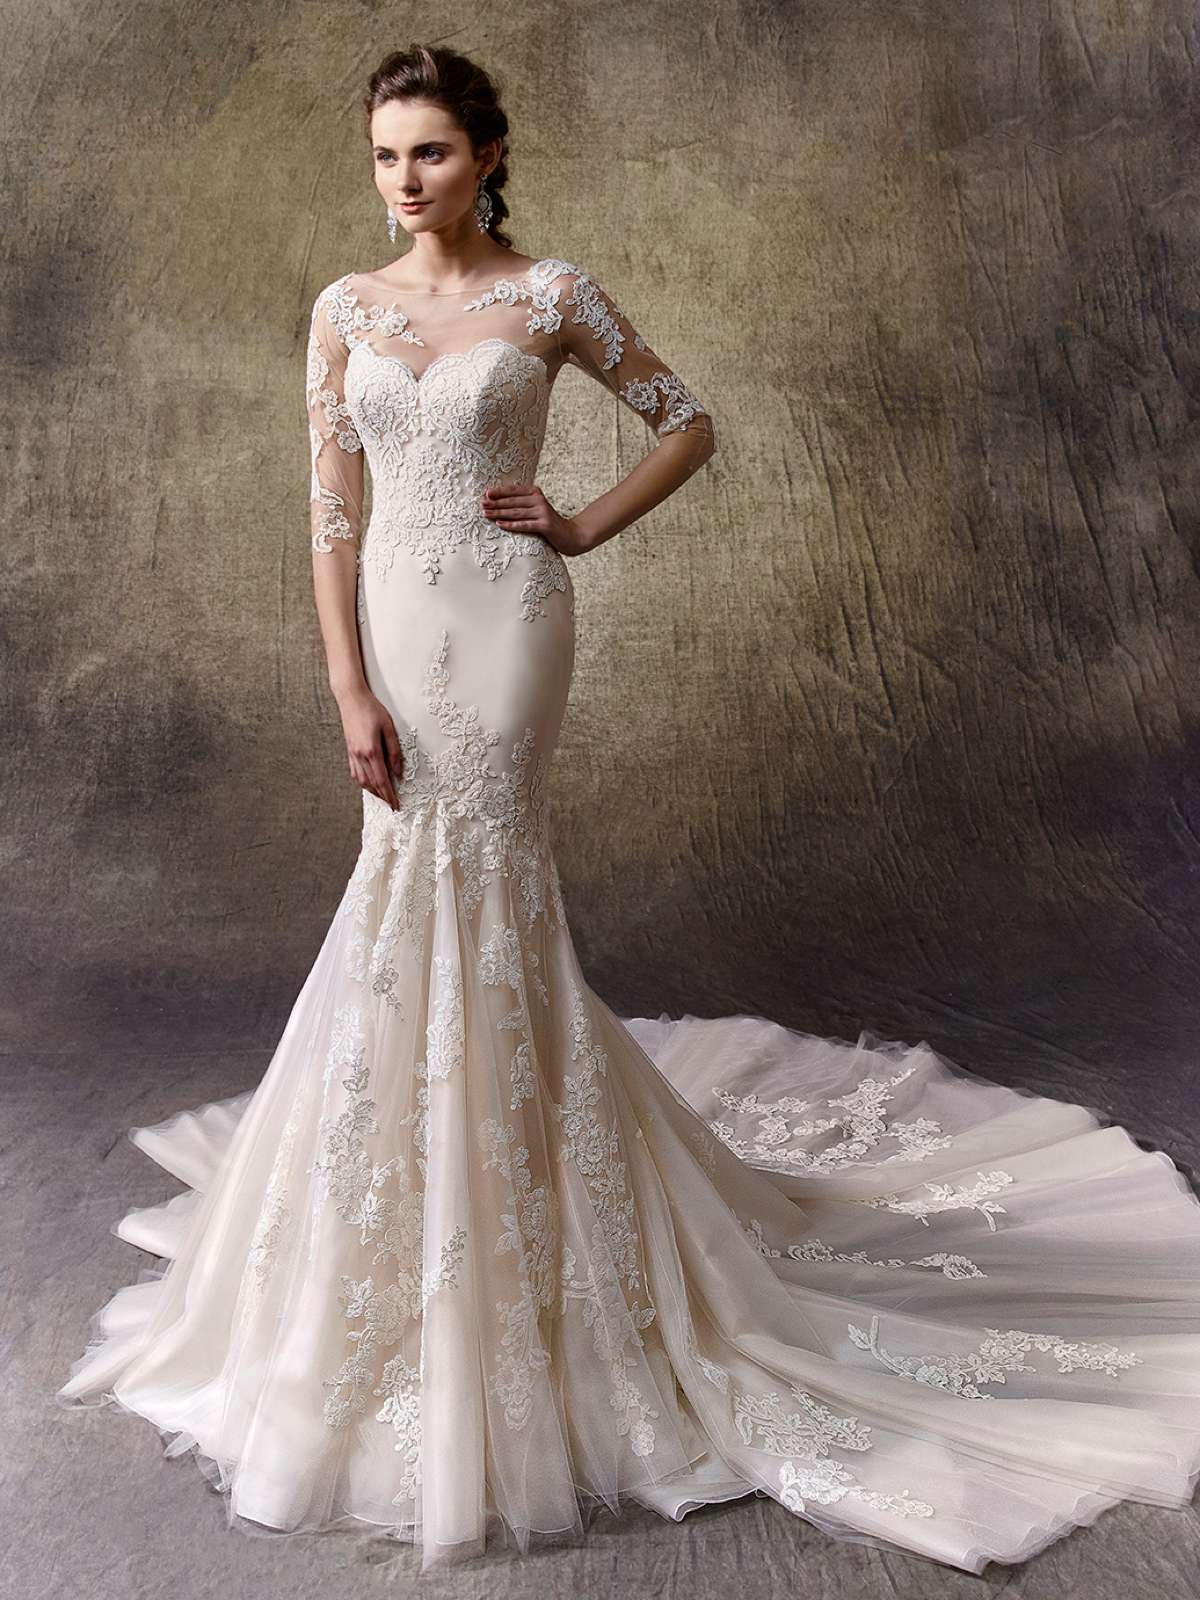 Bridal Trend Alert: The Illusion Wedding Dress